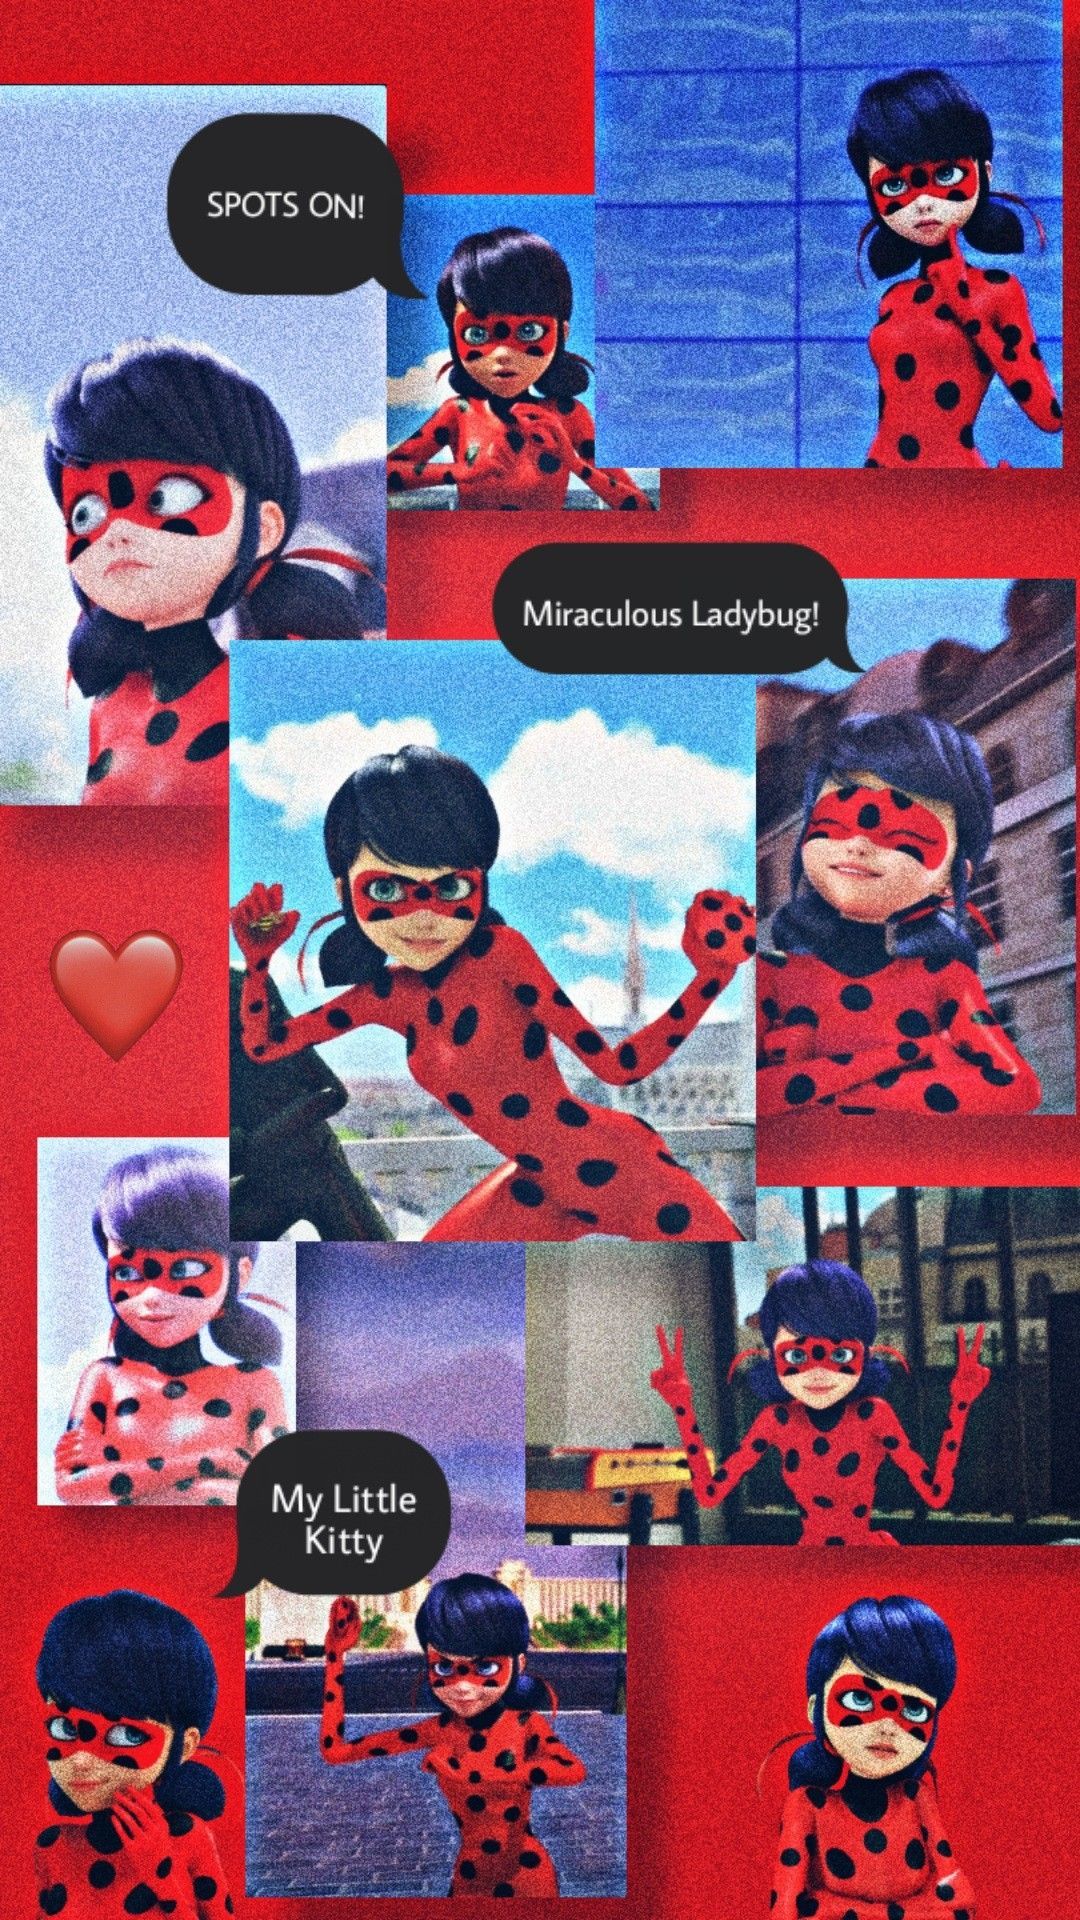 elcinagreste Profiles. Miraculous ladybug wallpaper, Miraculous ladybug anime, Miraculous ladybug movie